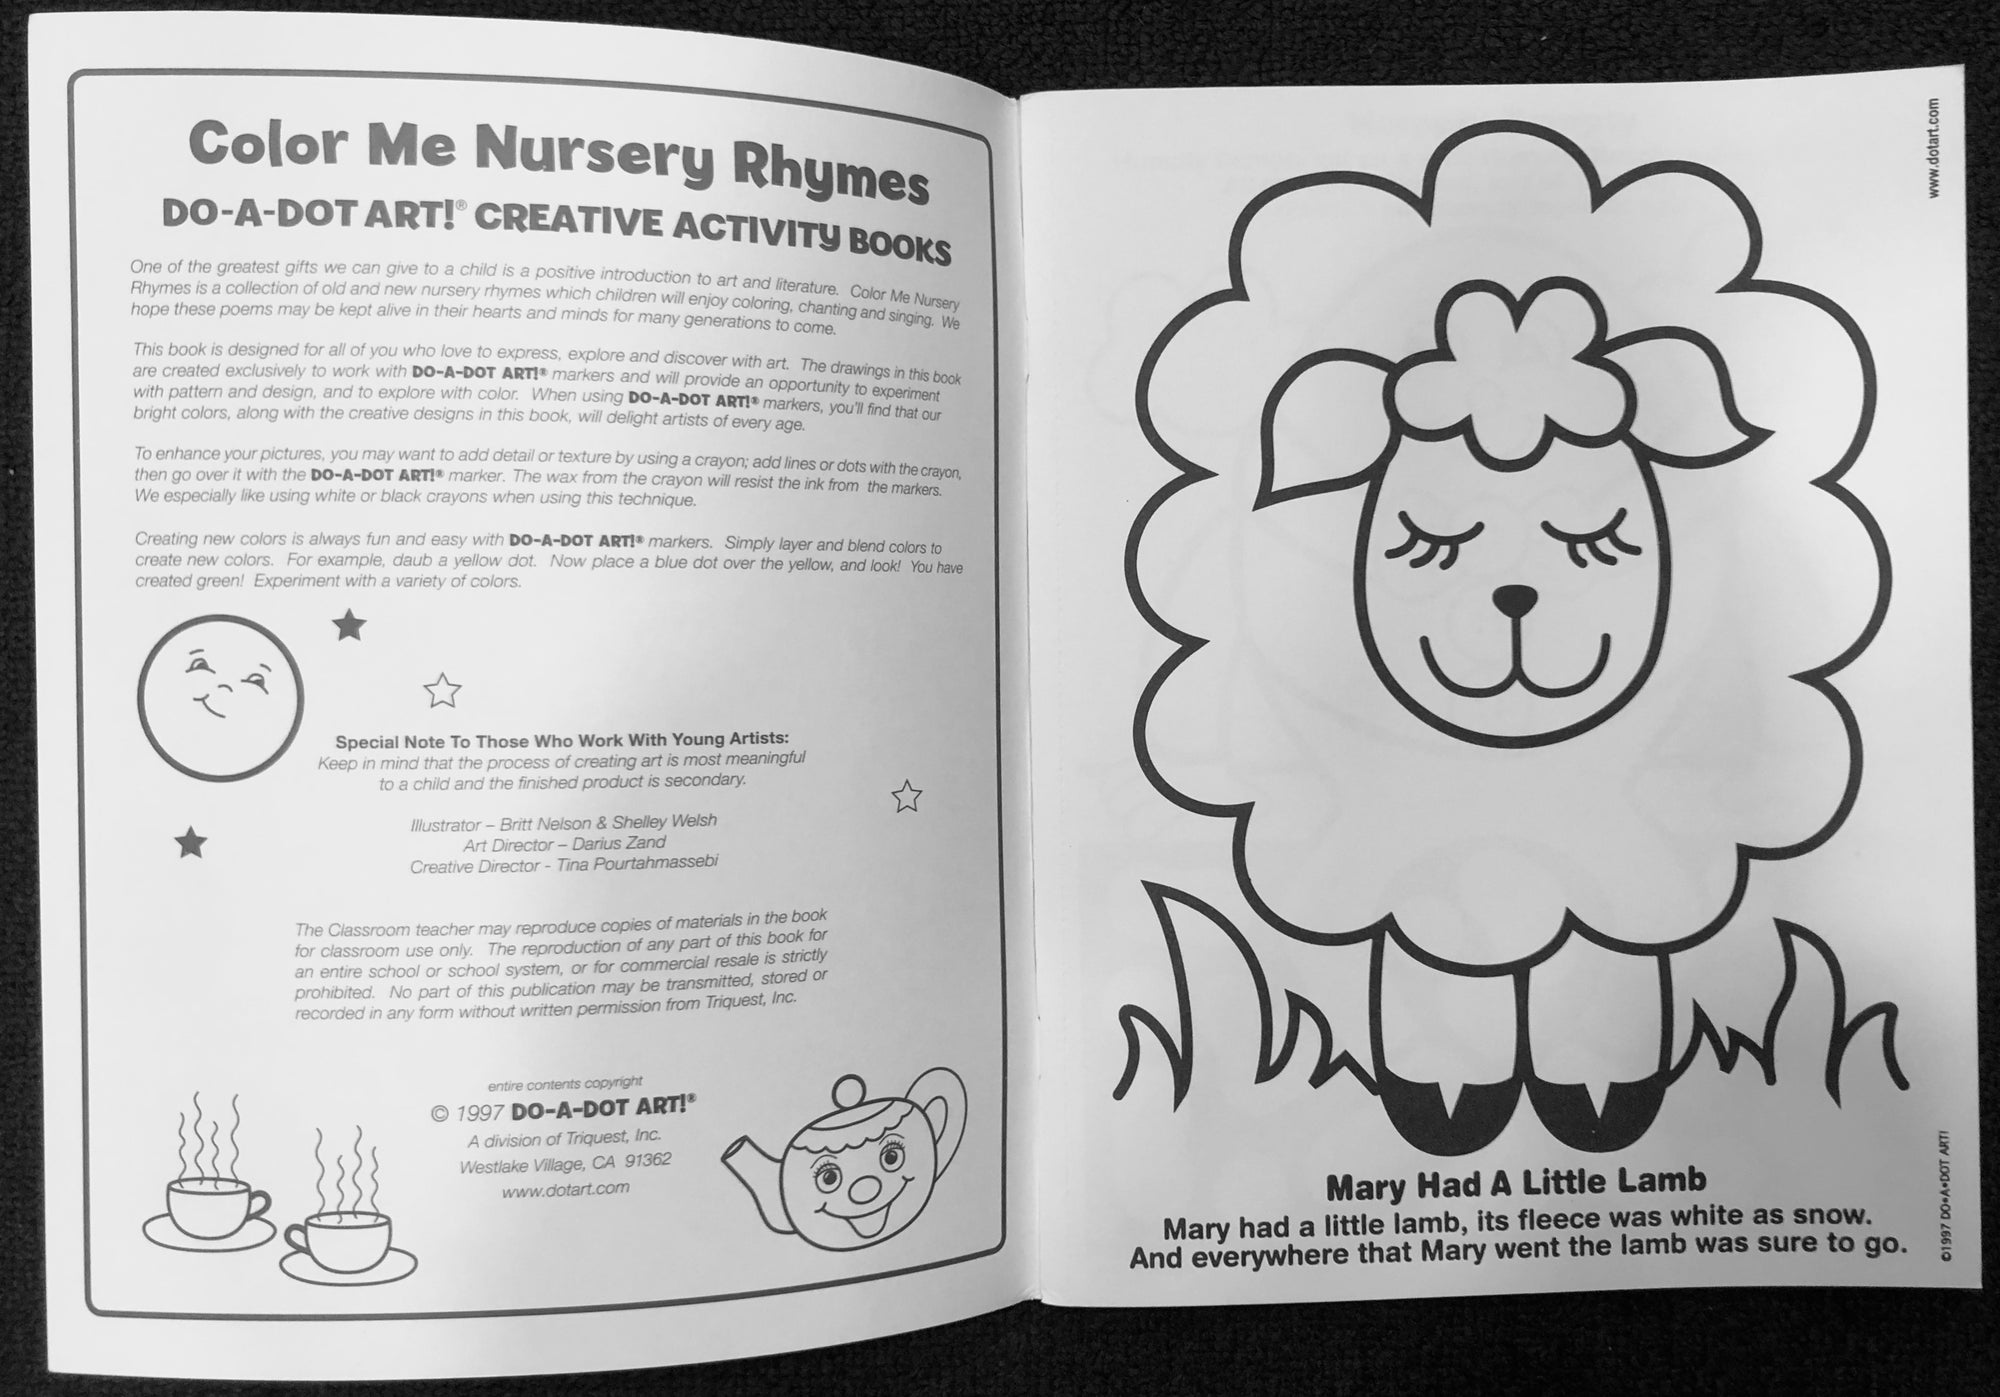 Do-A-Dot Art Creative Activity Book: Color Me Nursery Rhymes